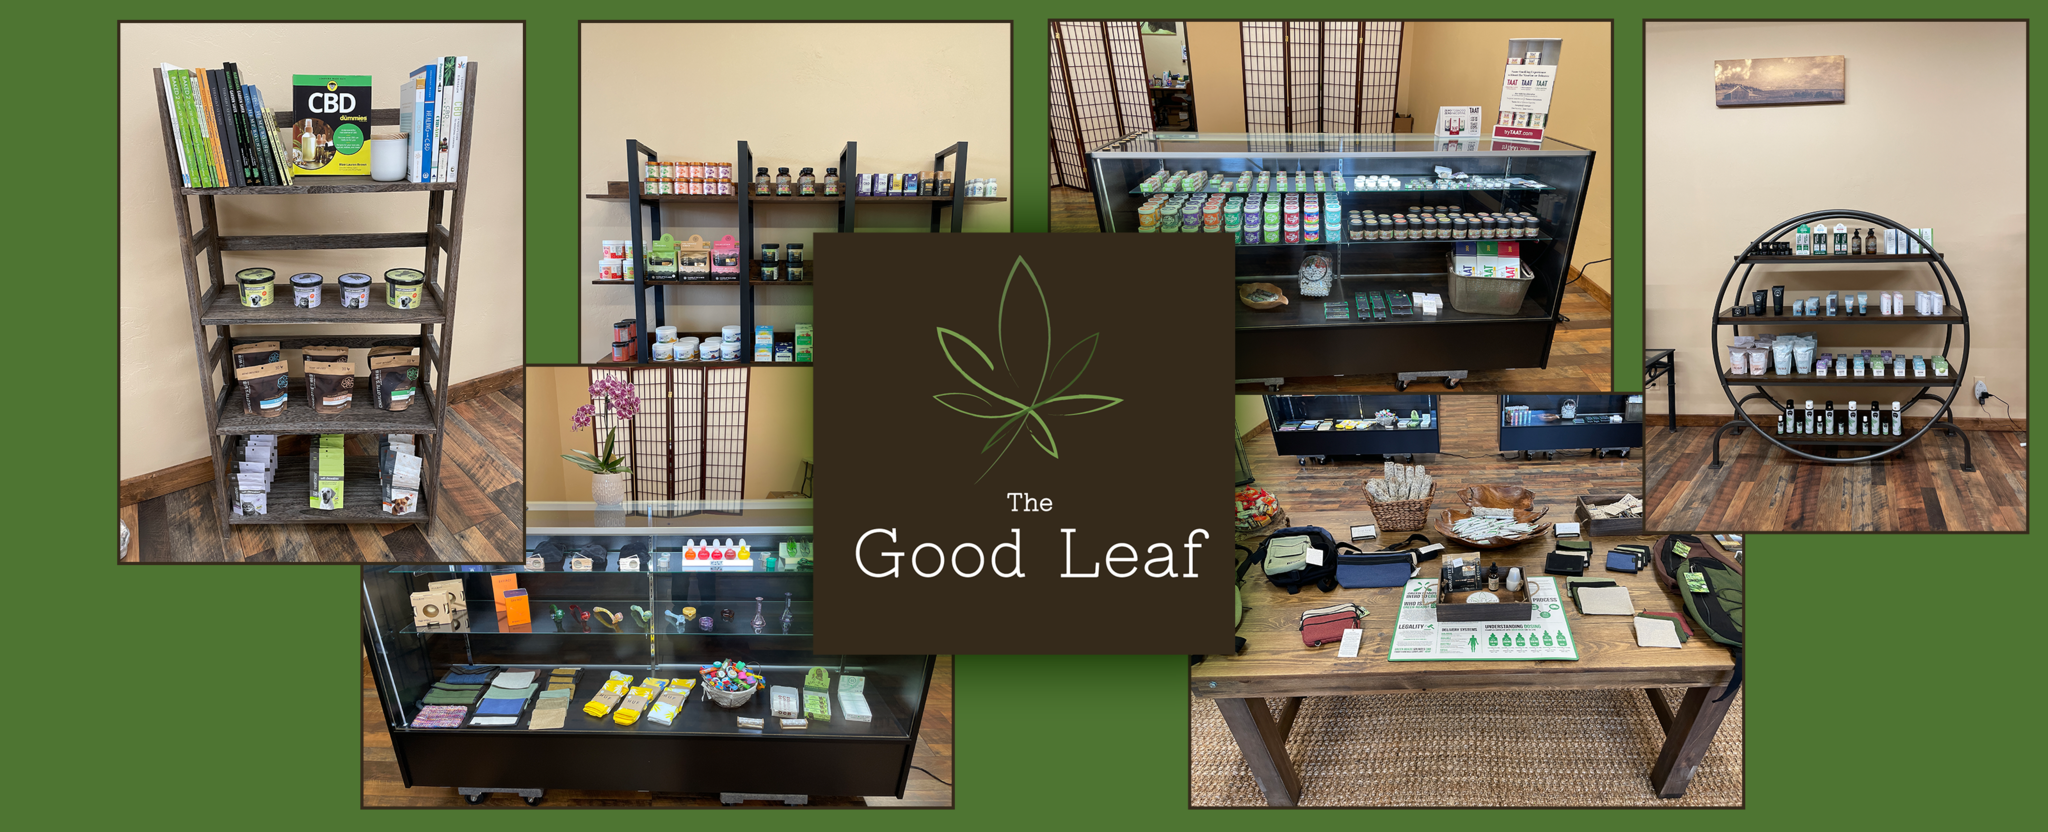 The Good Leaf store in Tucson, AZ